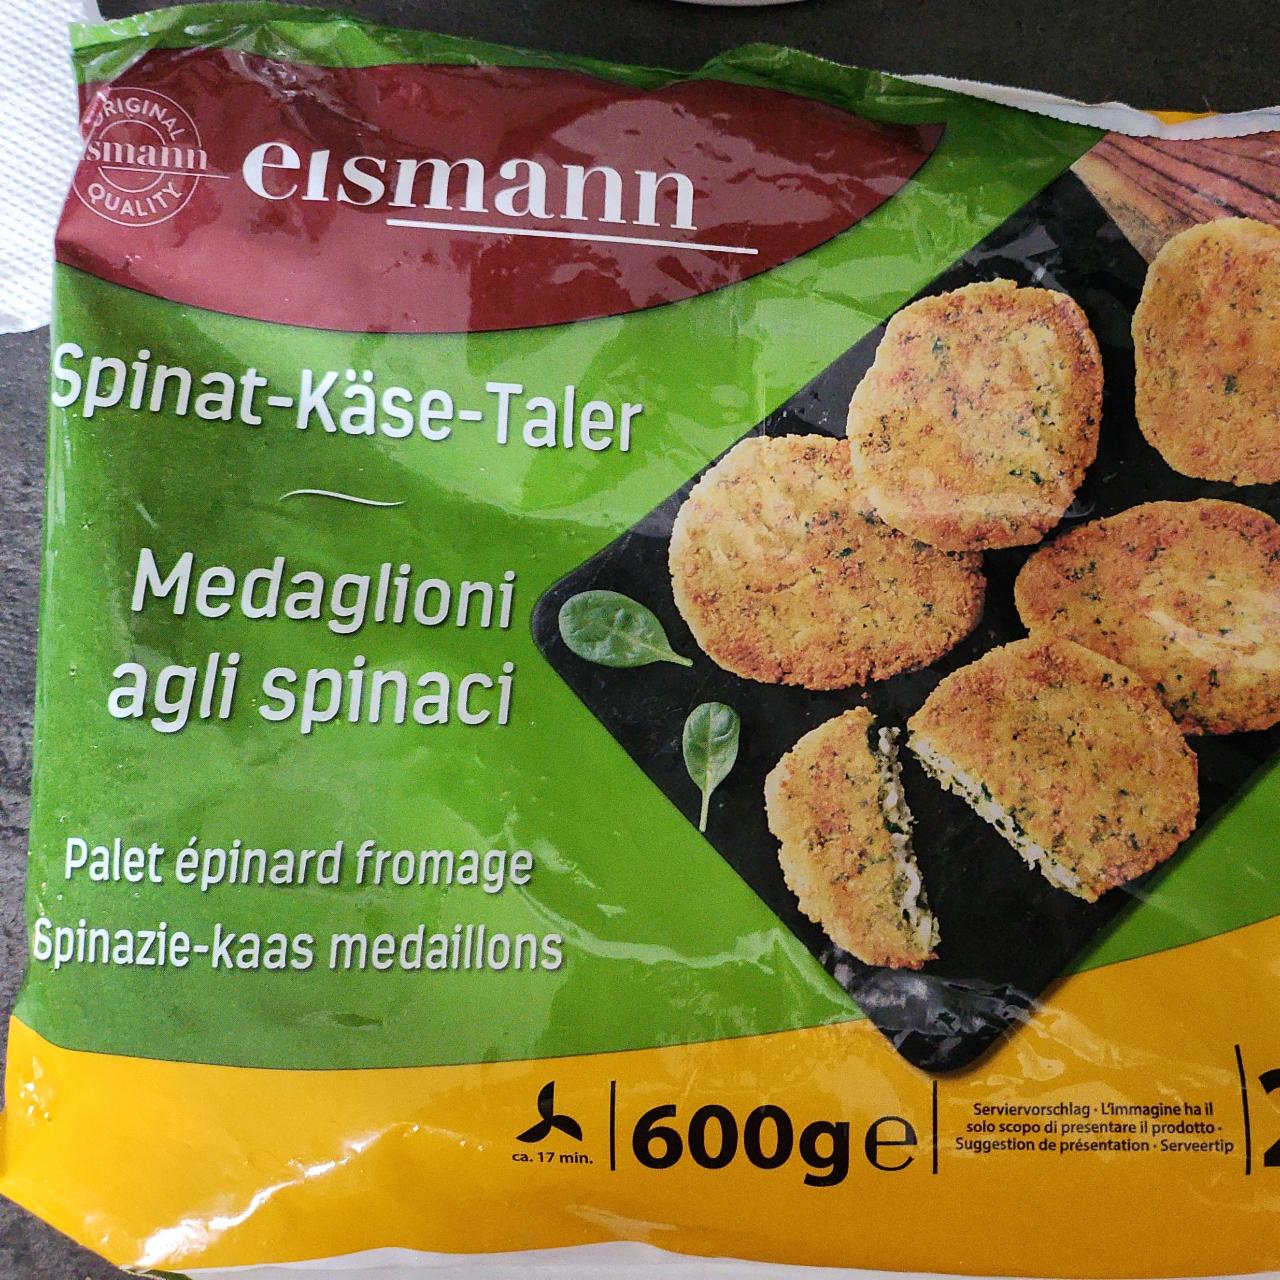 Fotografie - Spinat-käse-taler Medaglioni agli spinaci Eismann